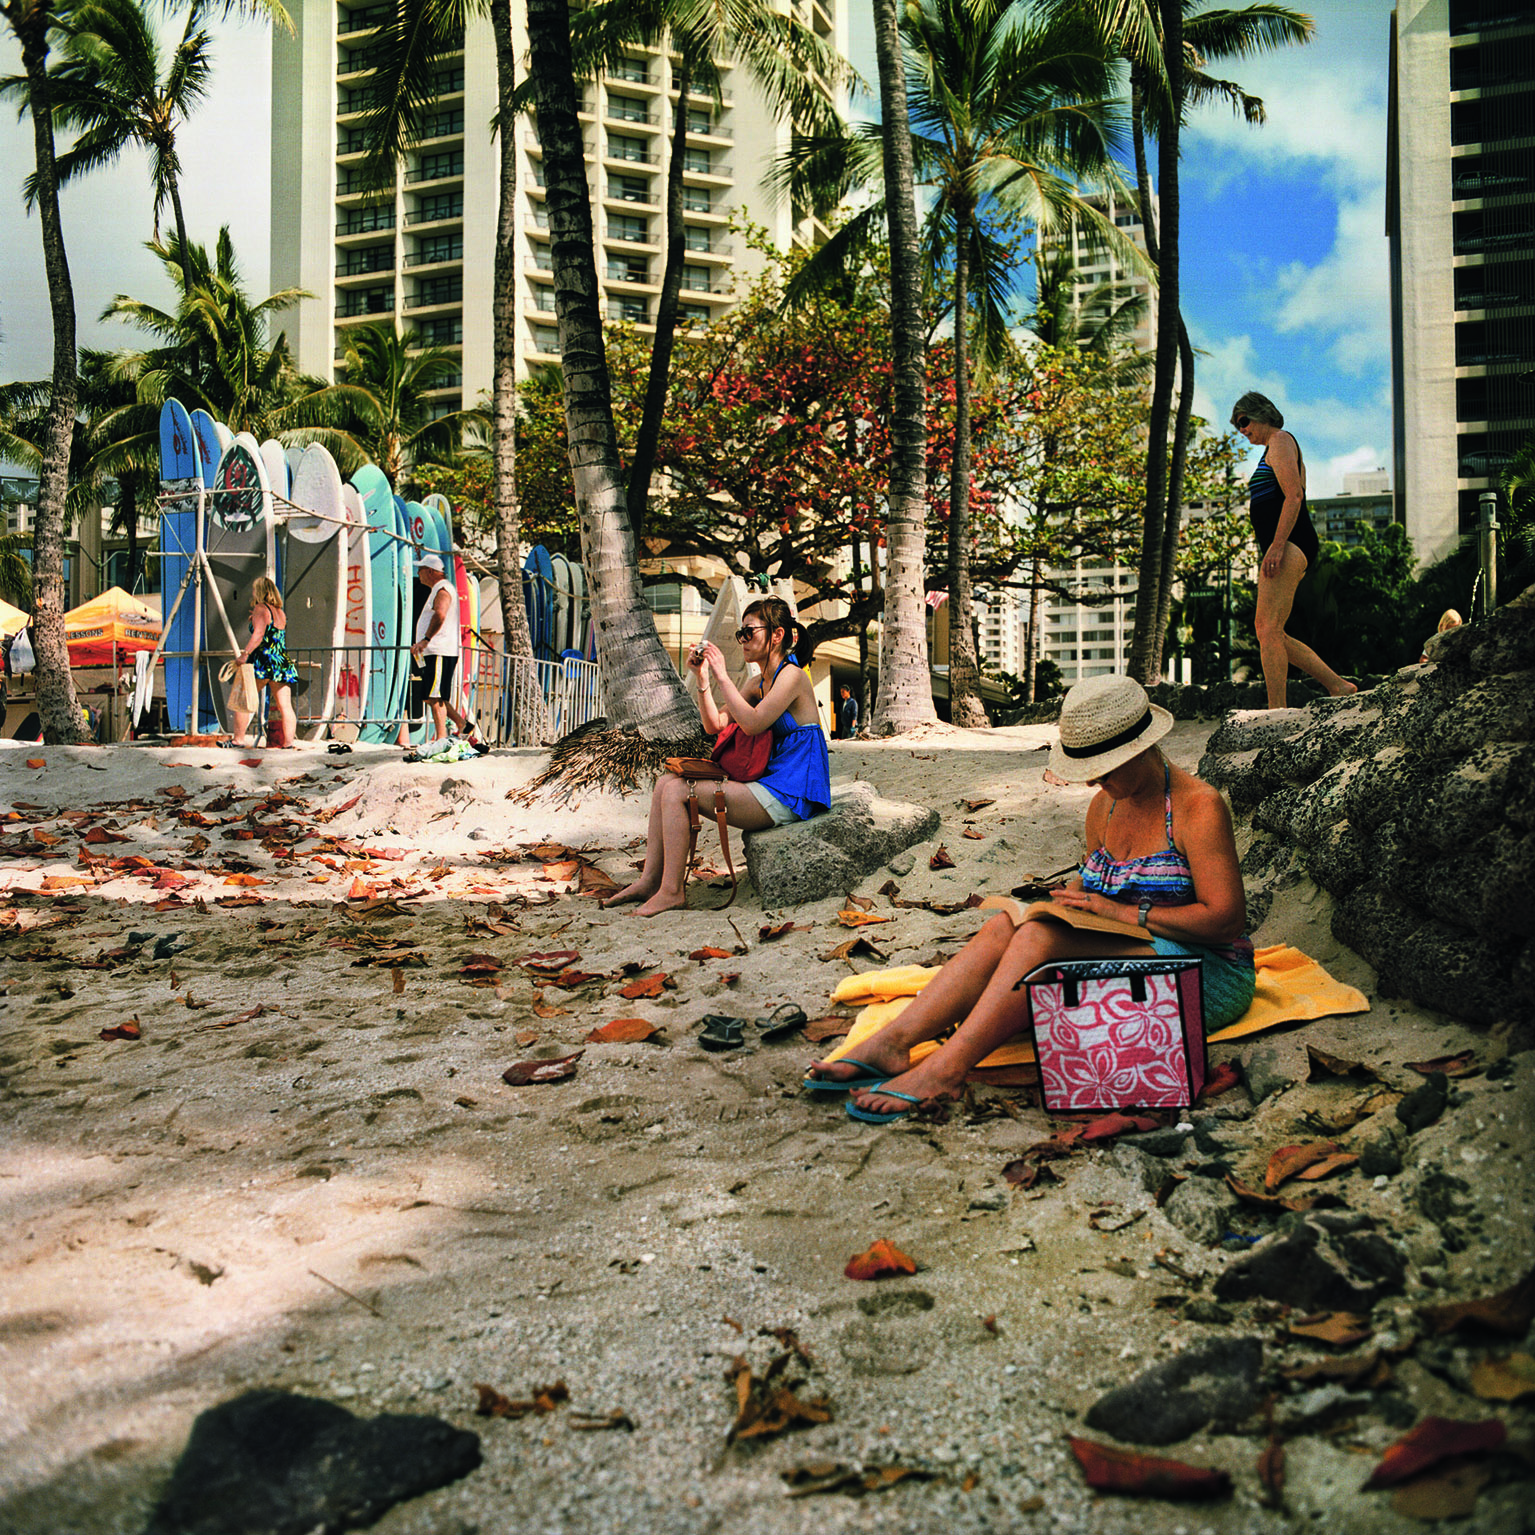 Raymond Depardon Plage de Wai Ki Ki, Honolulu, 2013 170 x 170 cm © Raymond Depardon / Magnum Photos. Crédits photographiques : Légende. Lieu. Date © Raymond Depardon / Magnum Photos